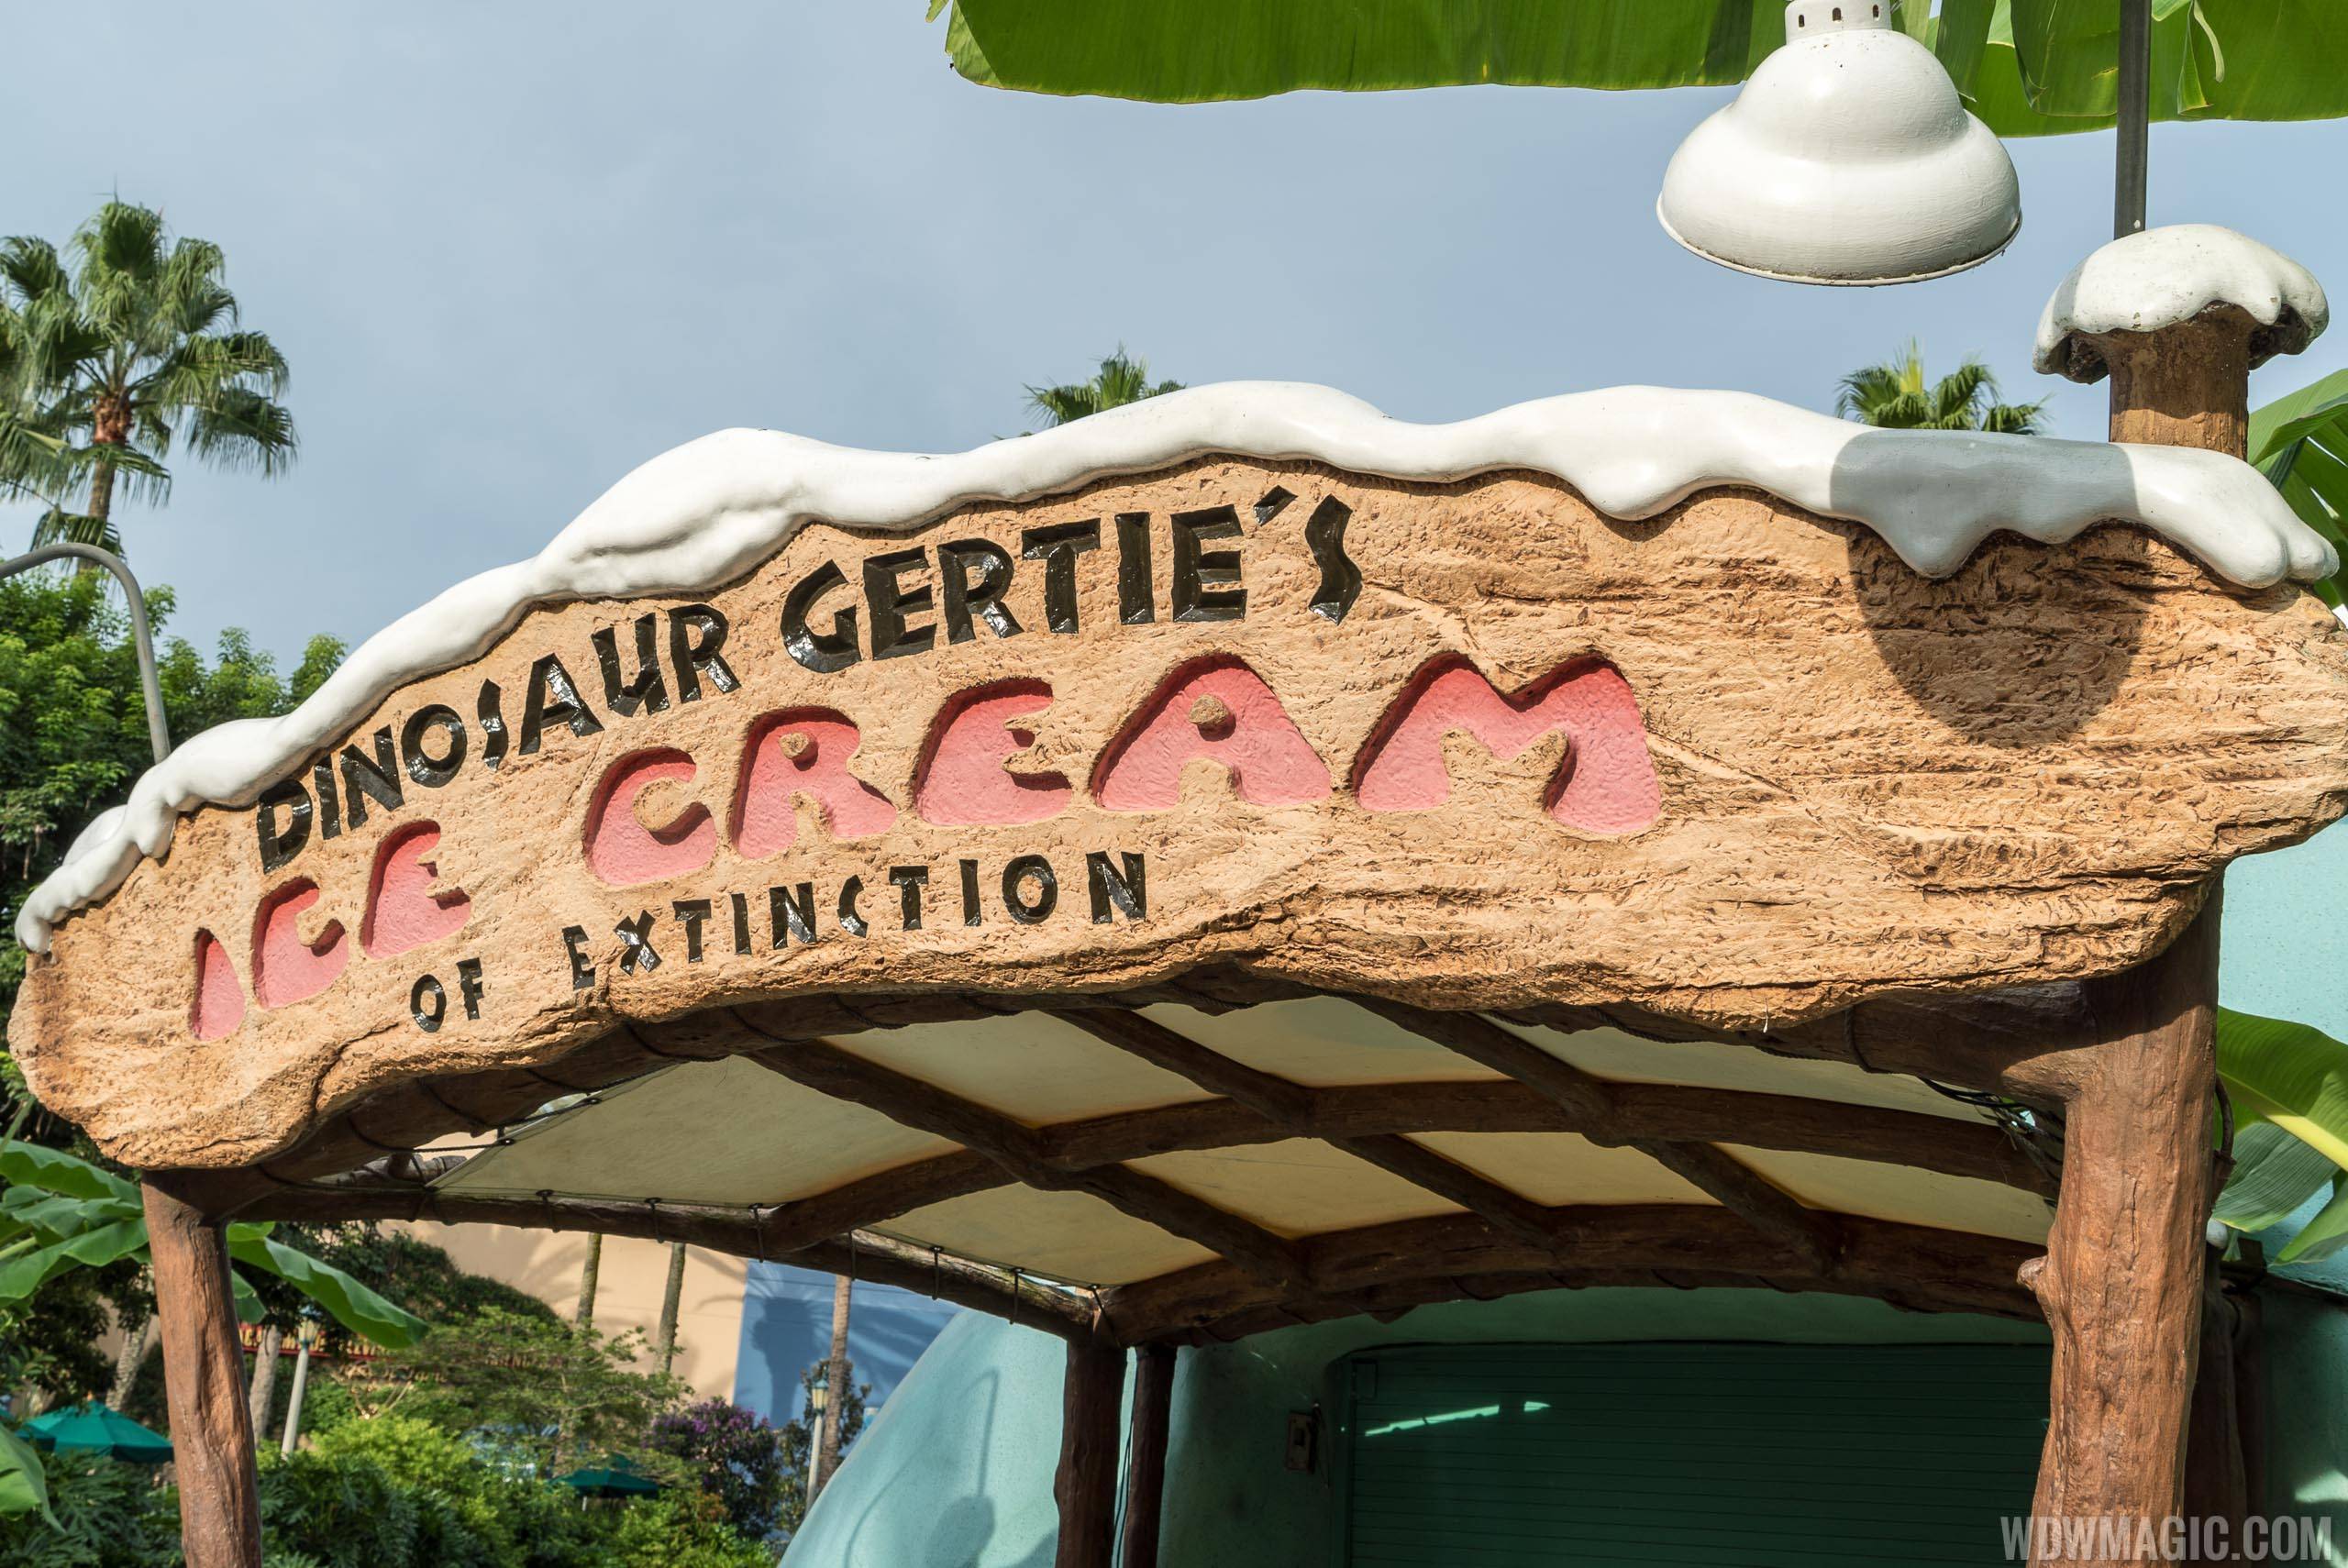 Dinosaur Gertie's Ice Cream of Extinction